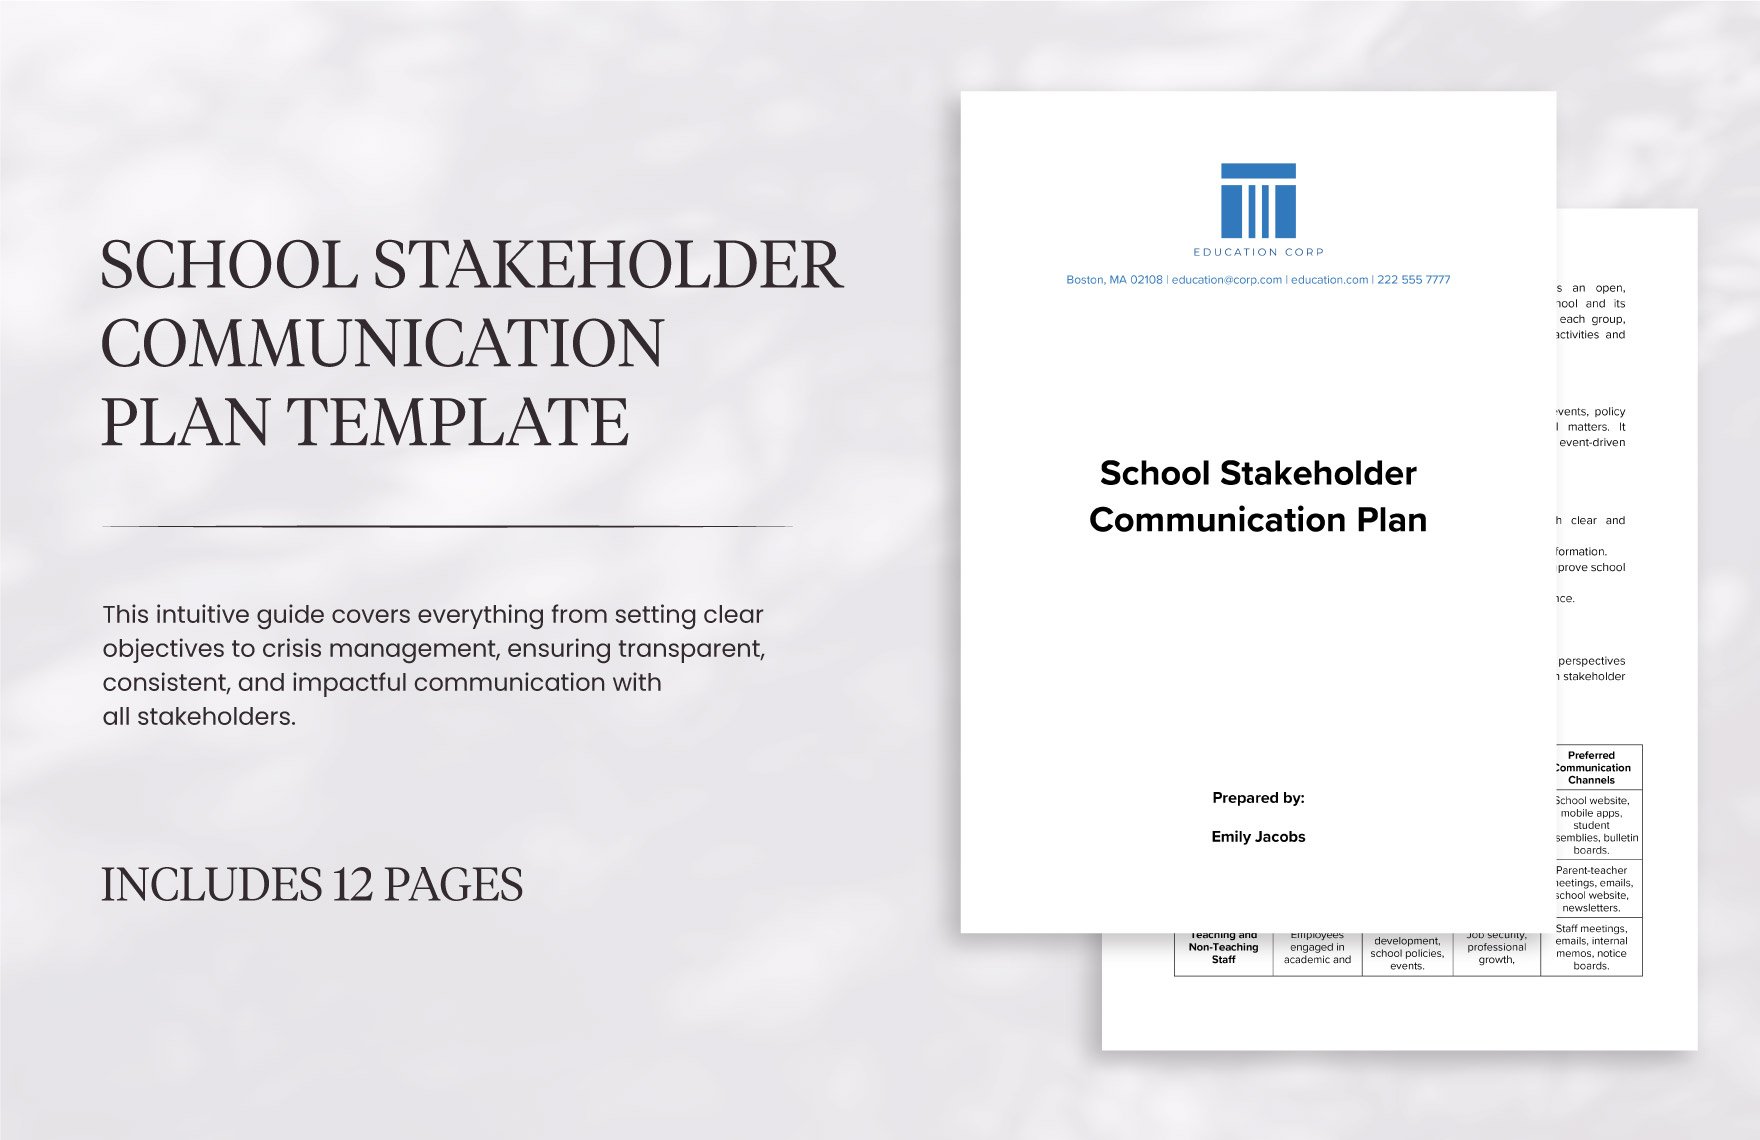 School Stakeholder Communication Plan Template